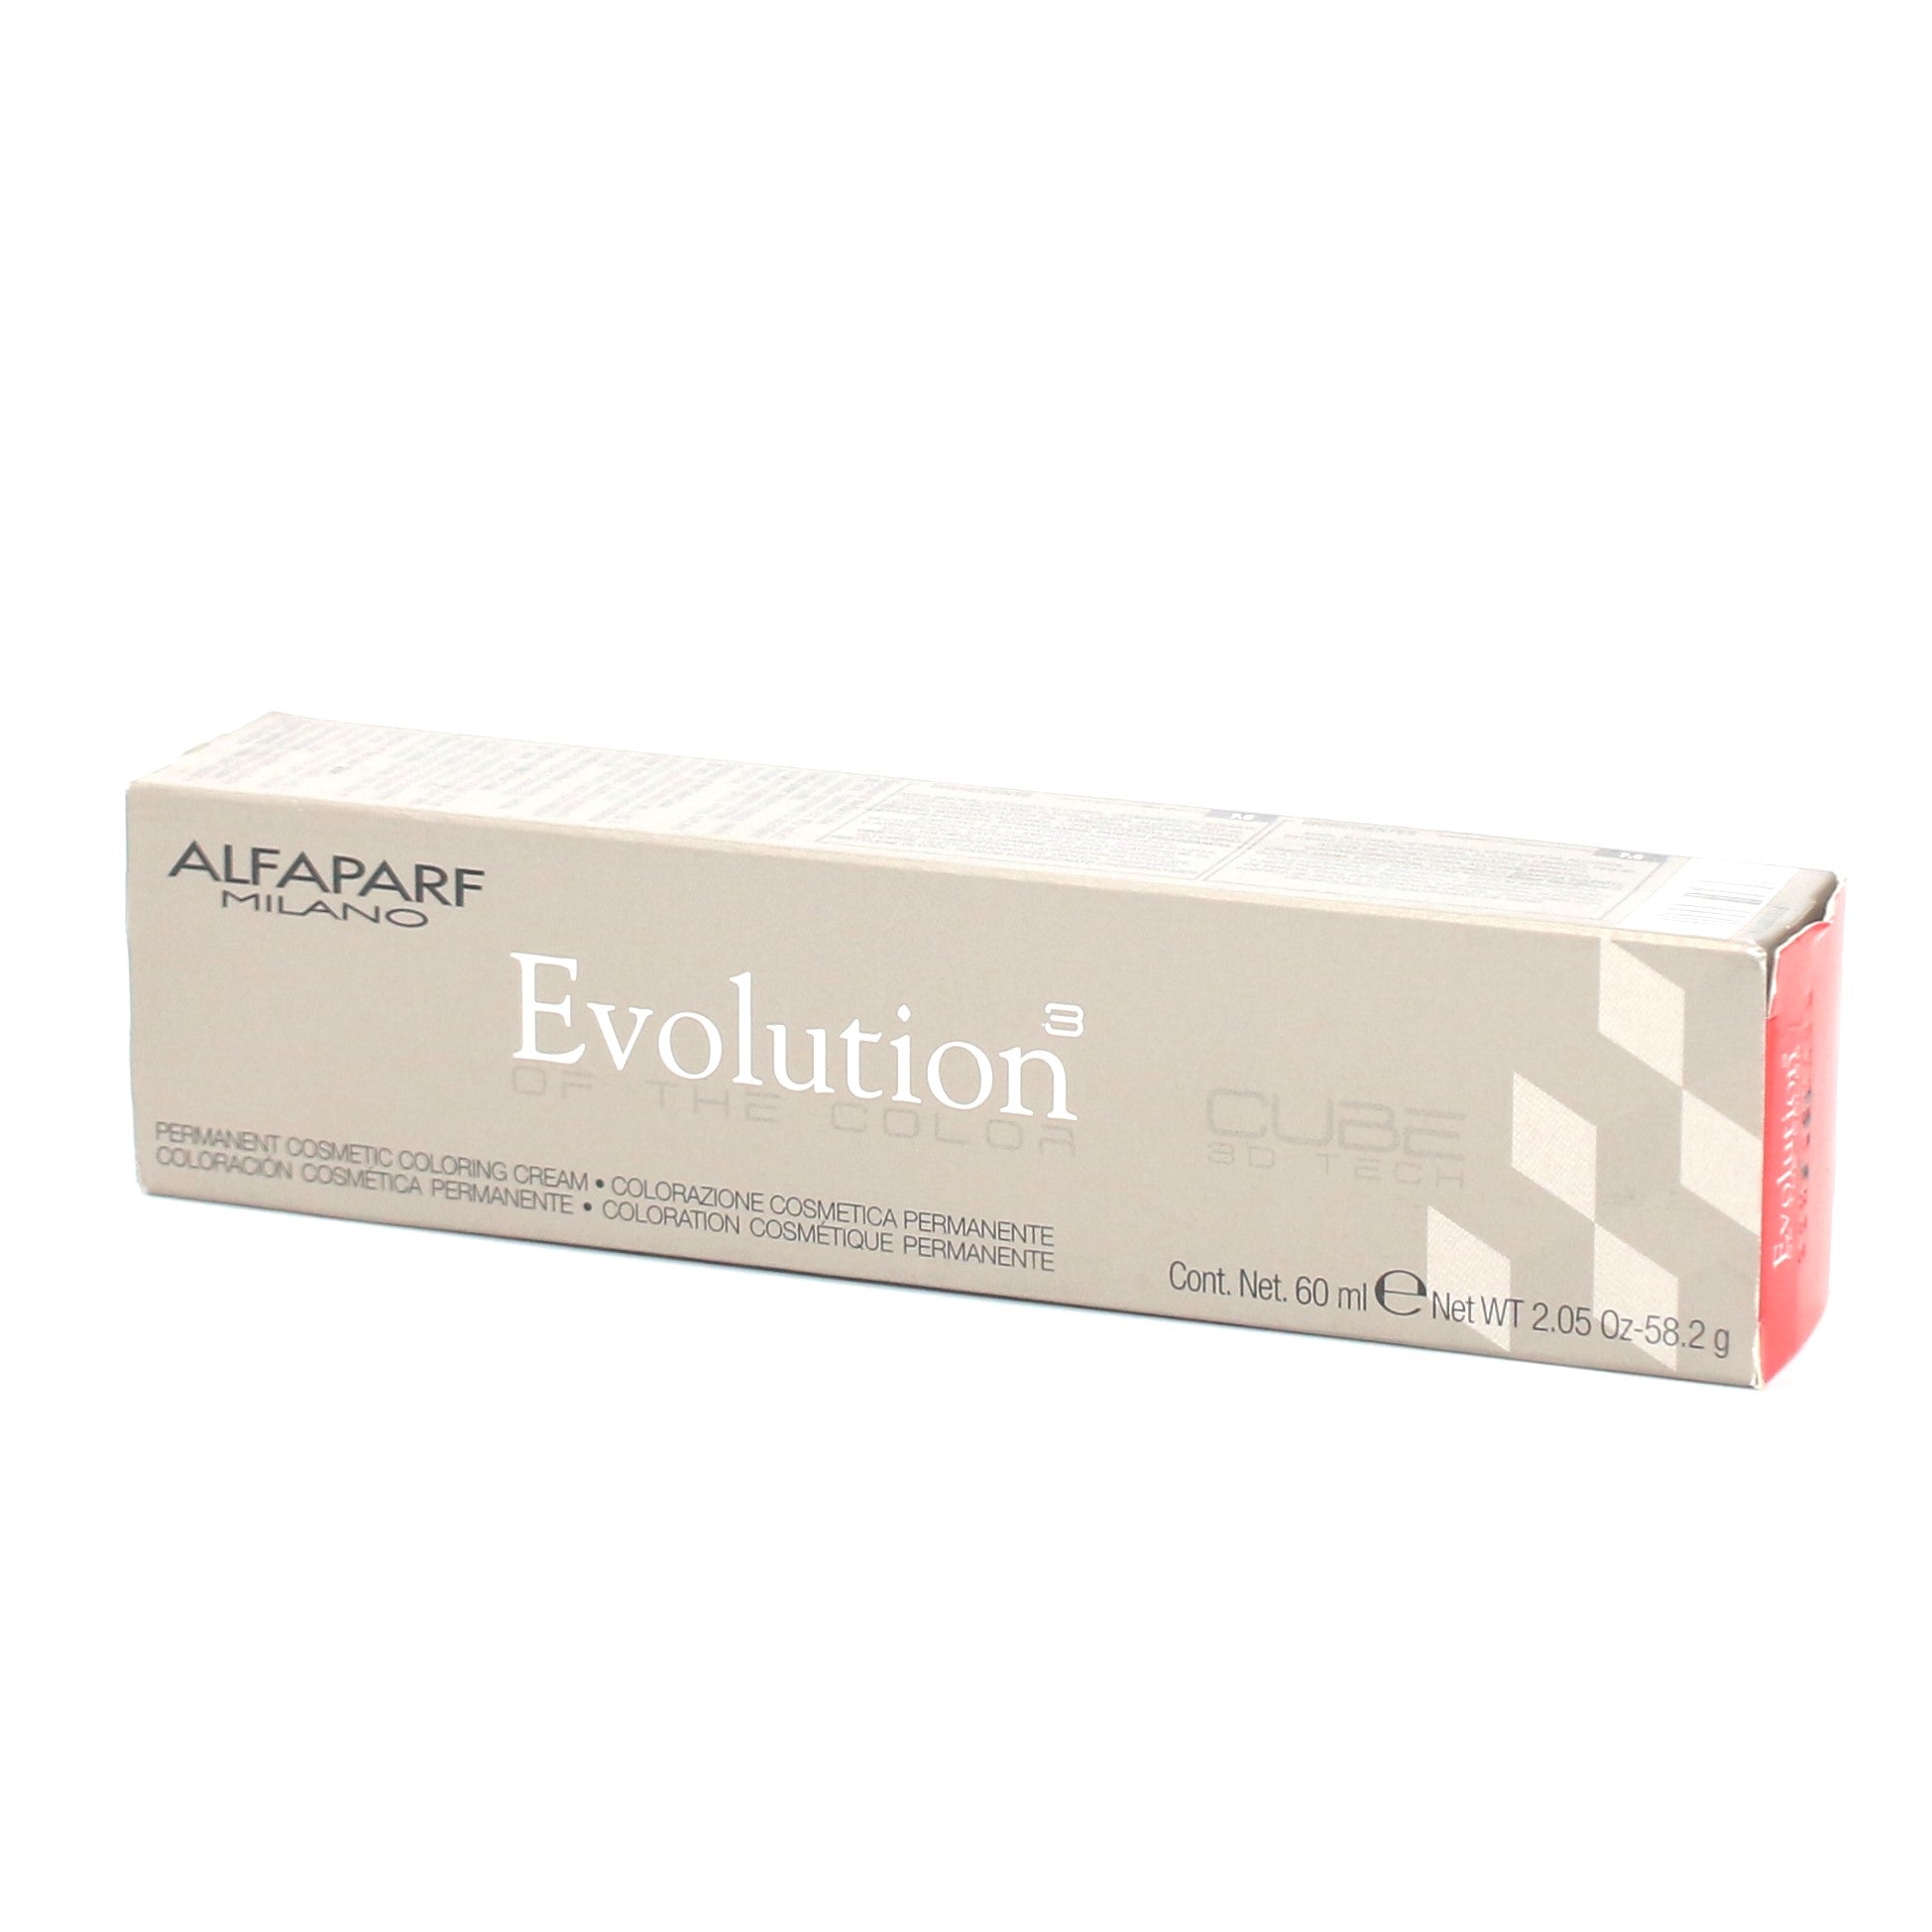 Alfaparf Evolution of the Color Permanent Coloring Cream (Reds) 2.05 oz